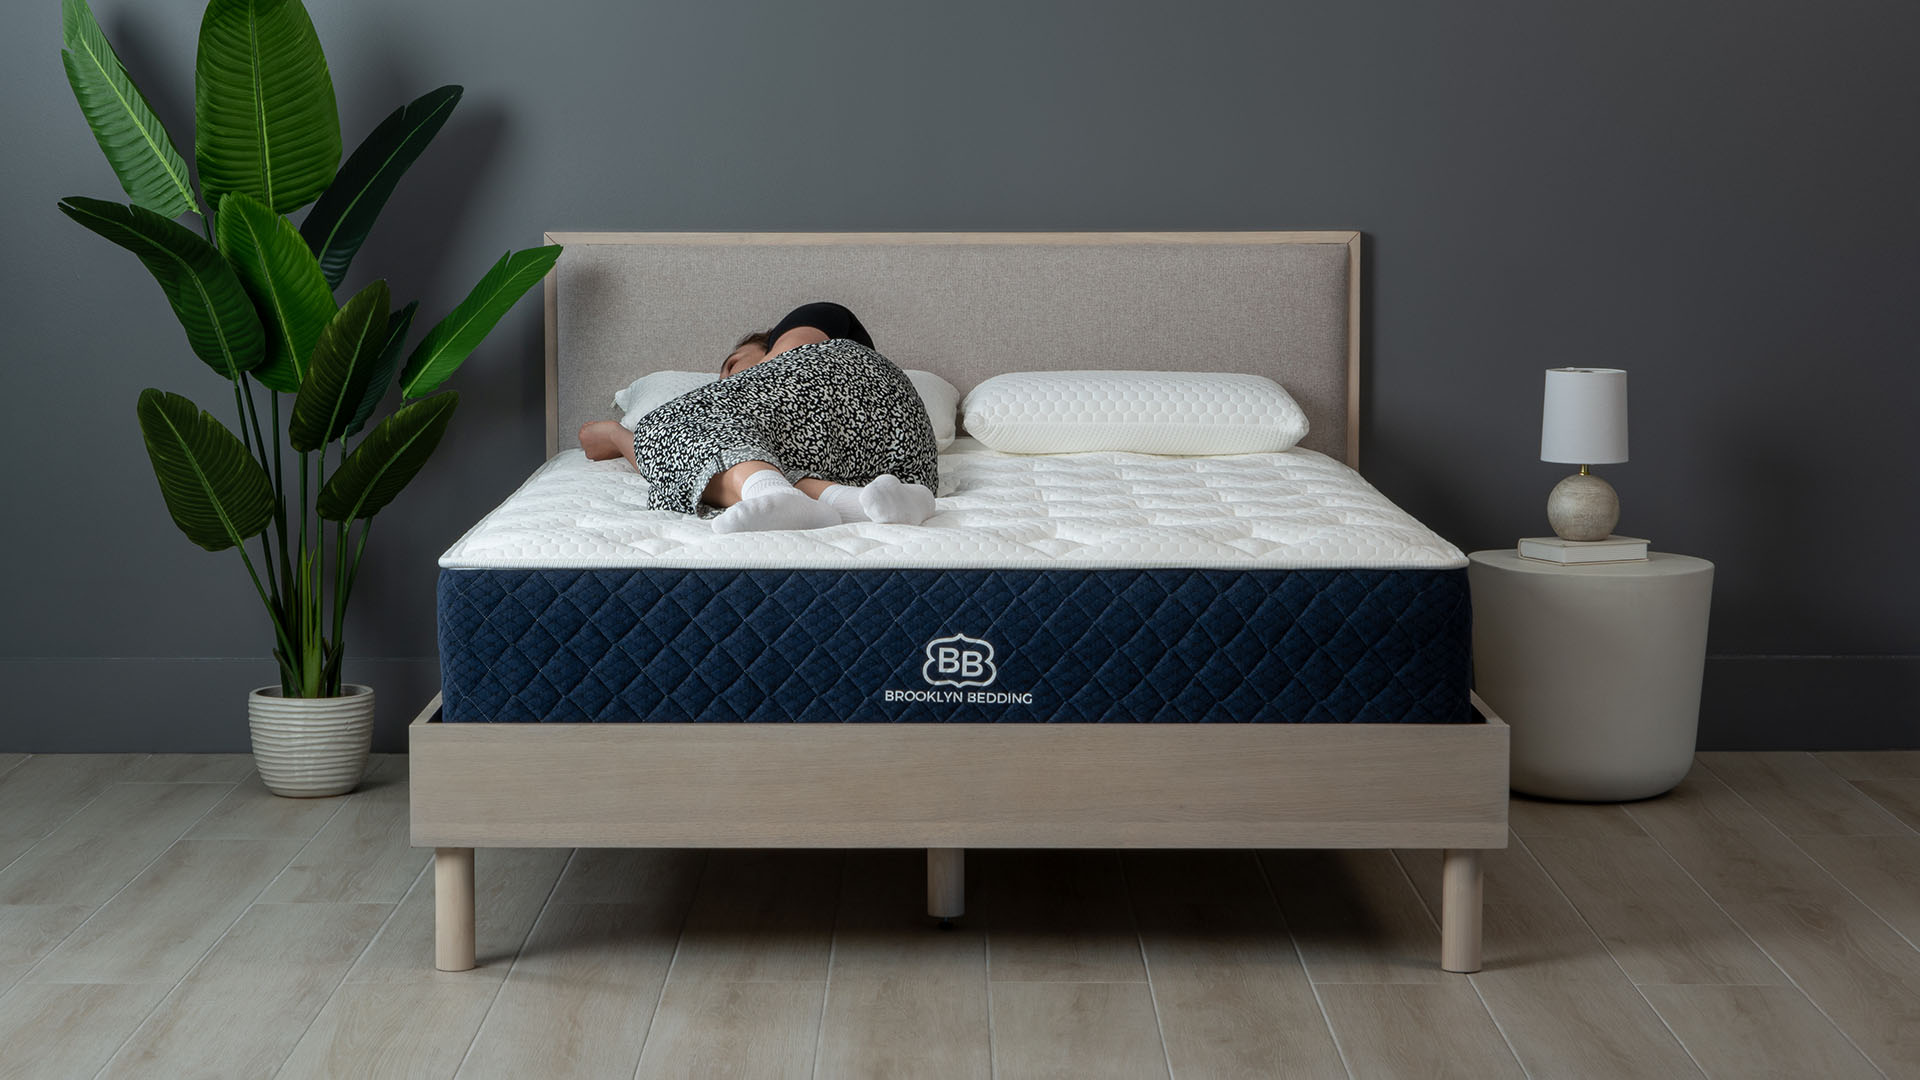 Brooklyn Bedding Signature Hybrid mattress with Tom's Guide Sleep Editor lying on it